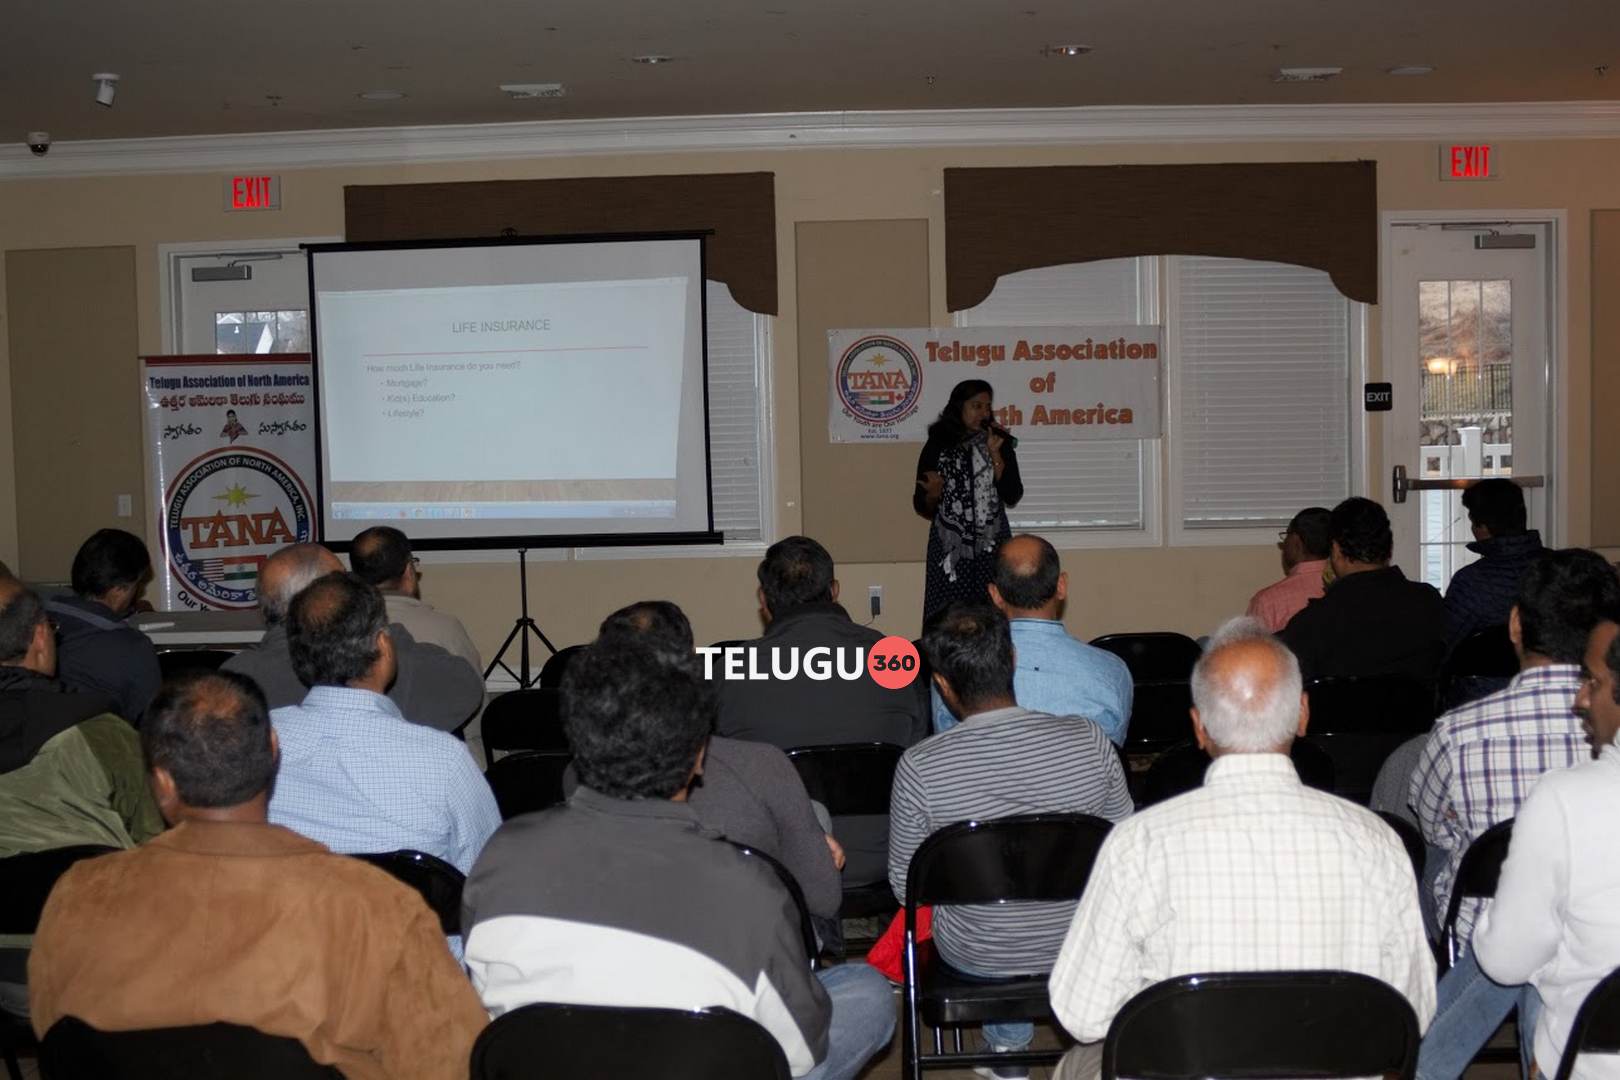 TANA conducted Seminar on Tax & Insurance in Philadelphia